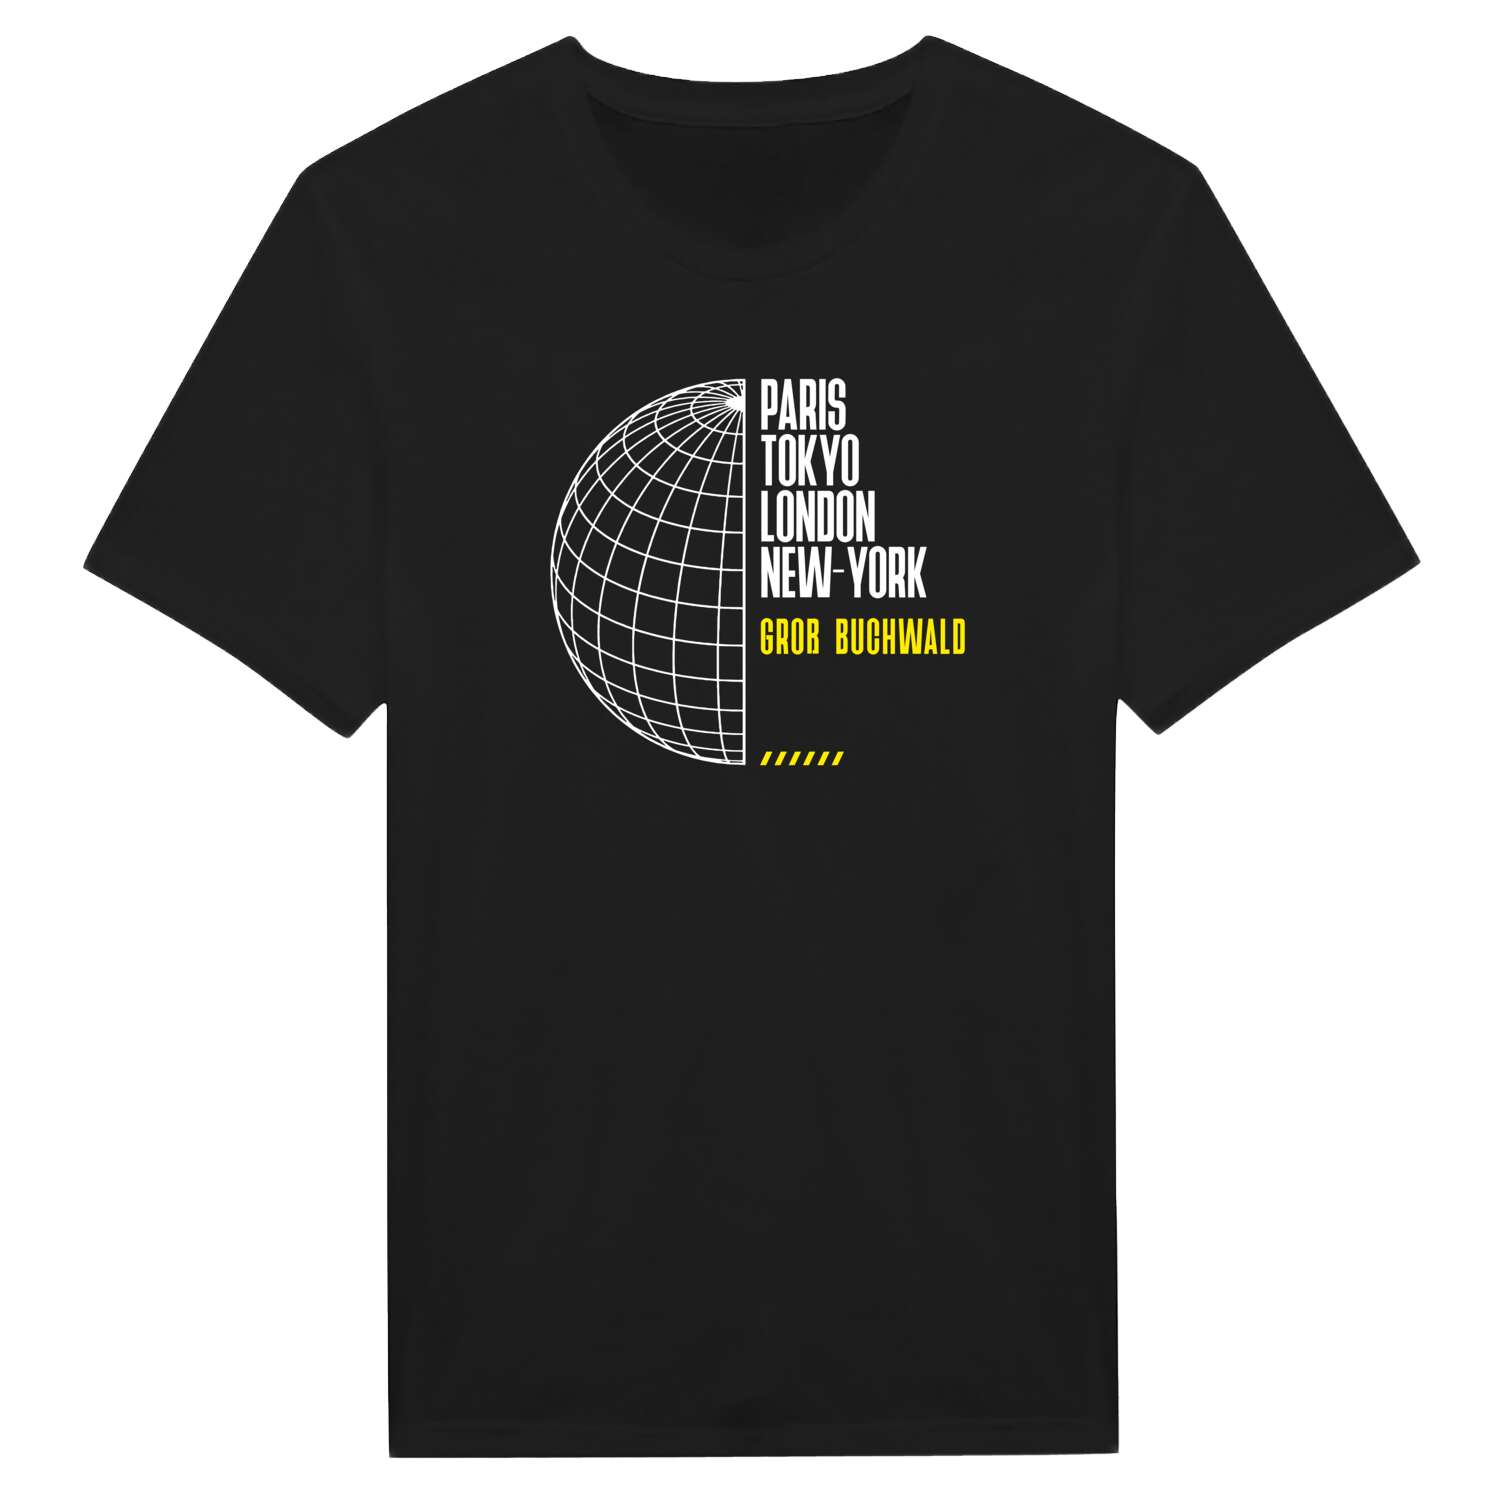 Groß Buchwald T-Shirt »Paris Tokyo London«